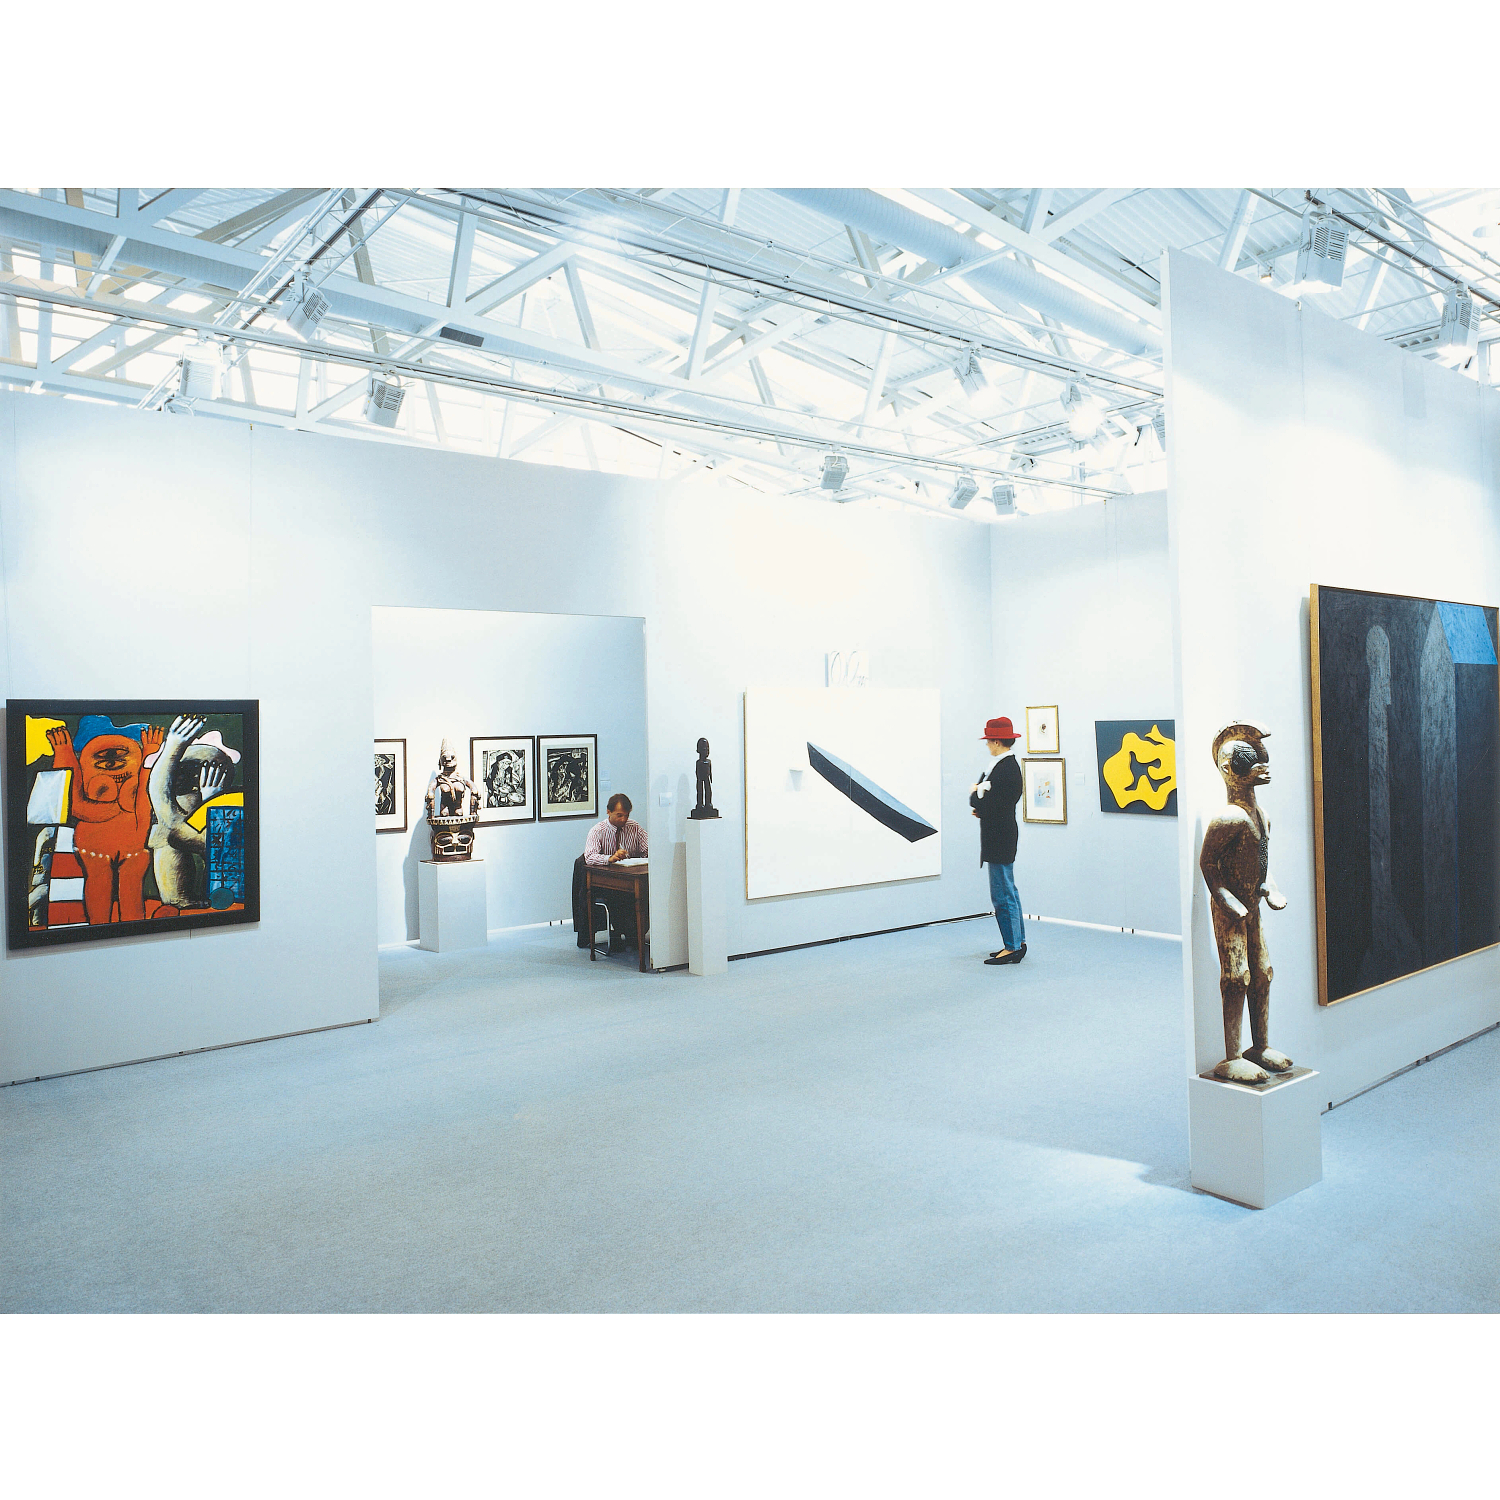 Buy Freestanding art exhibition display stands with Custom Designs